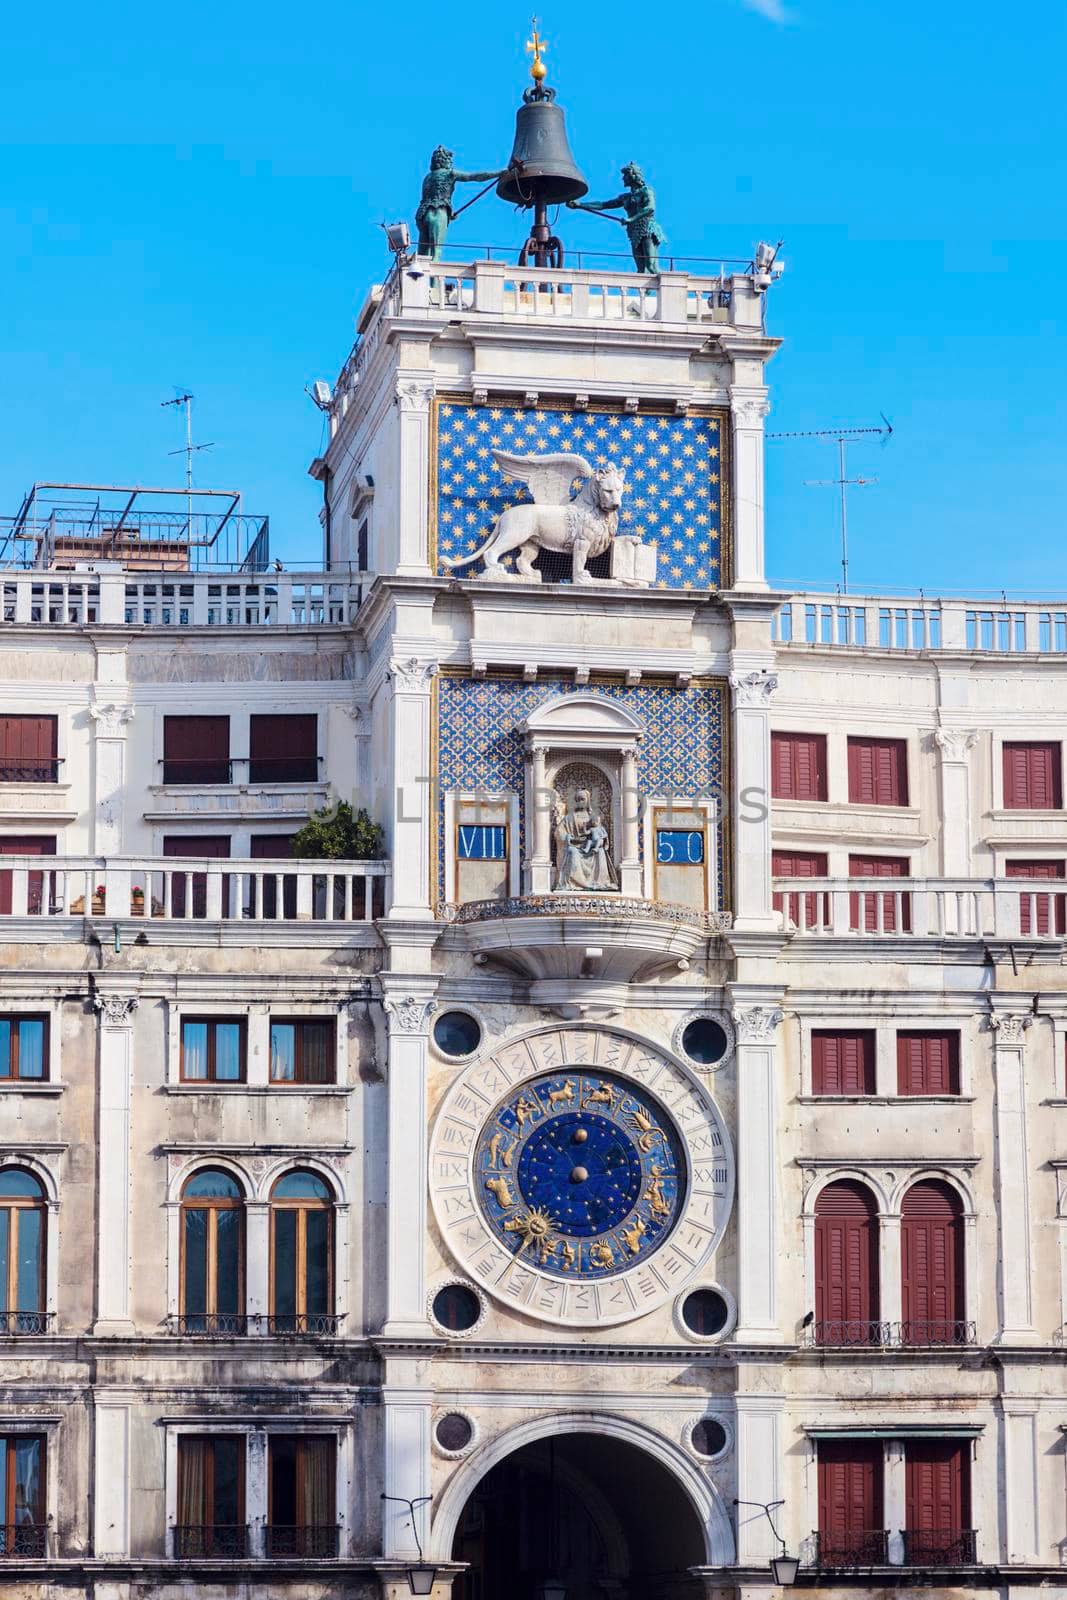 St. Mark's Clocktower - Piazza San Marco in Venice. Venice, Veneto, Italy